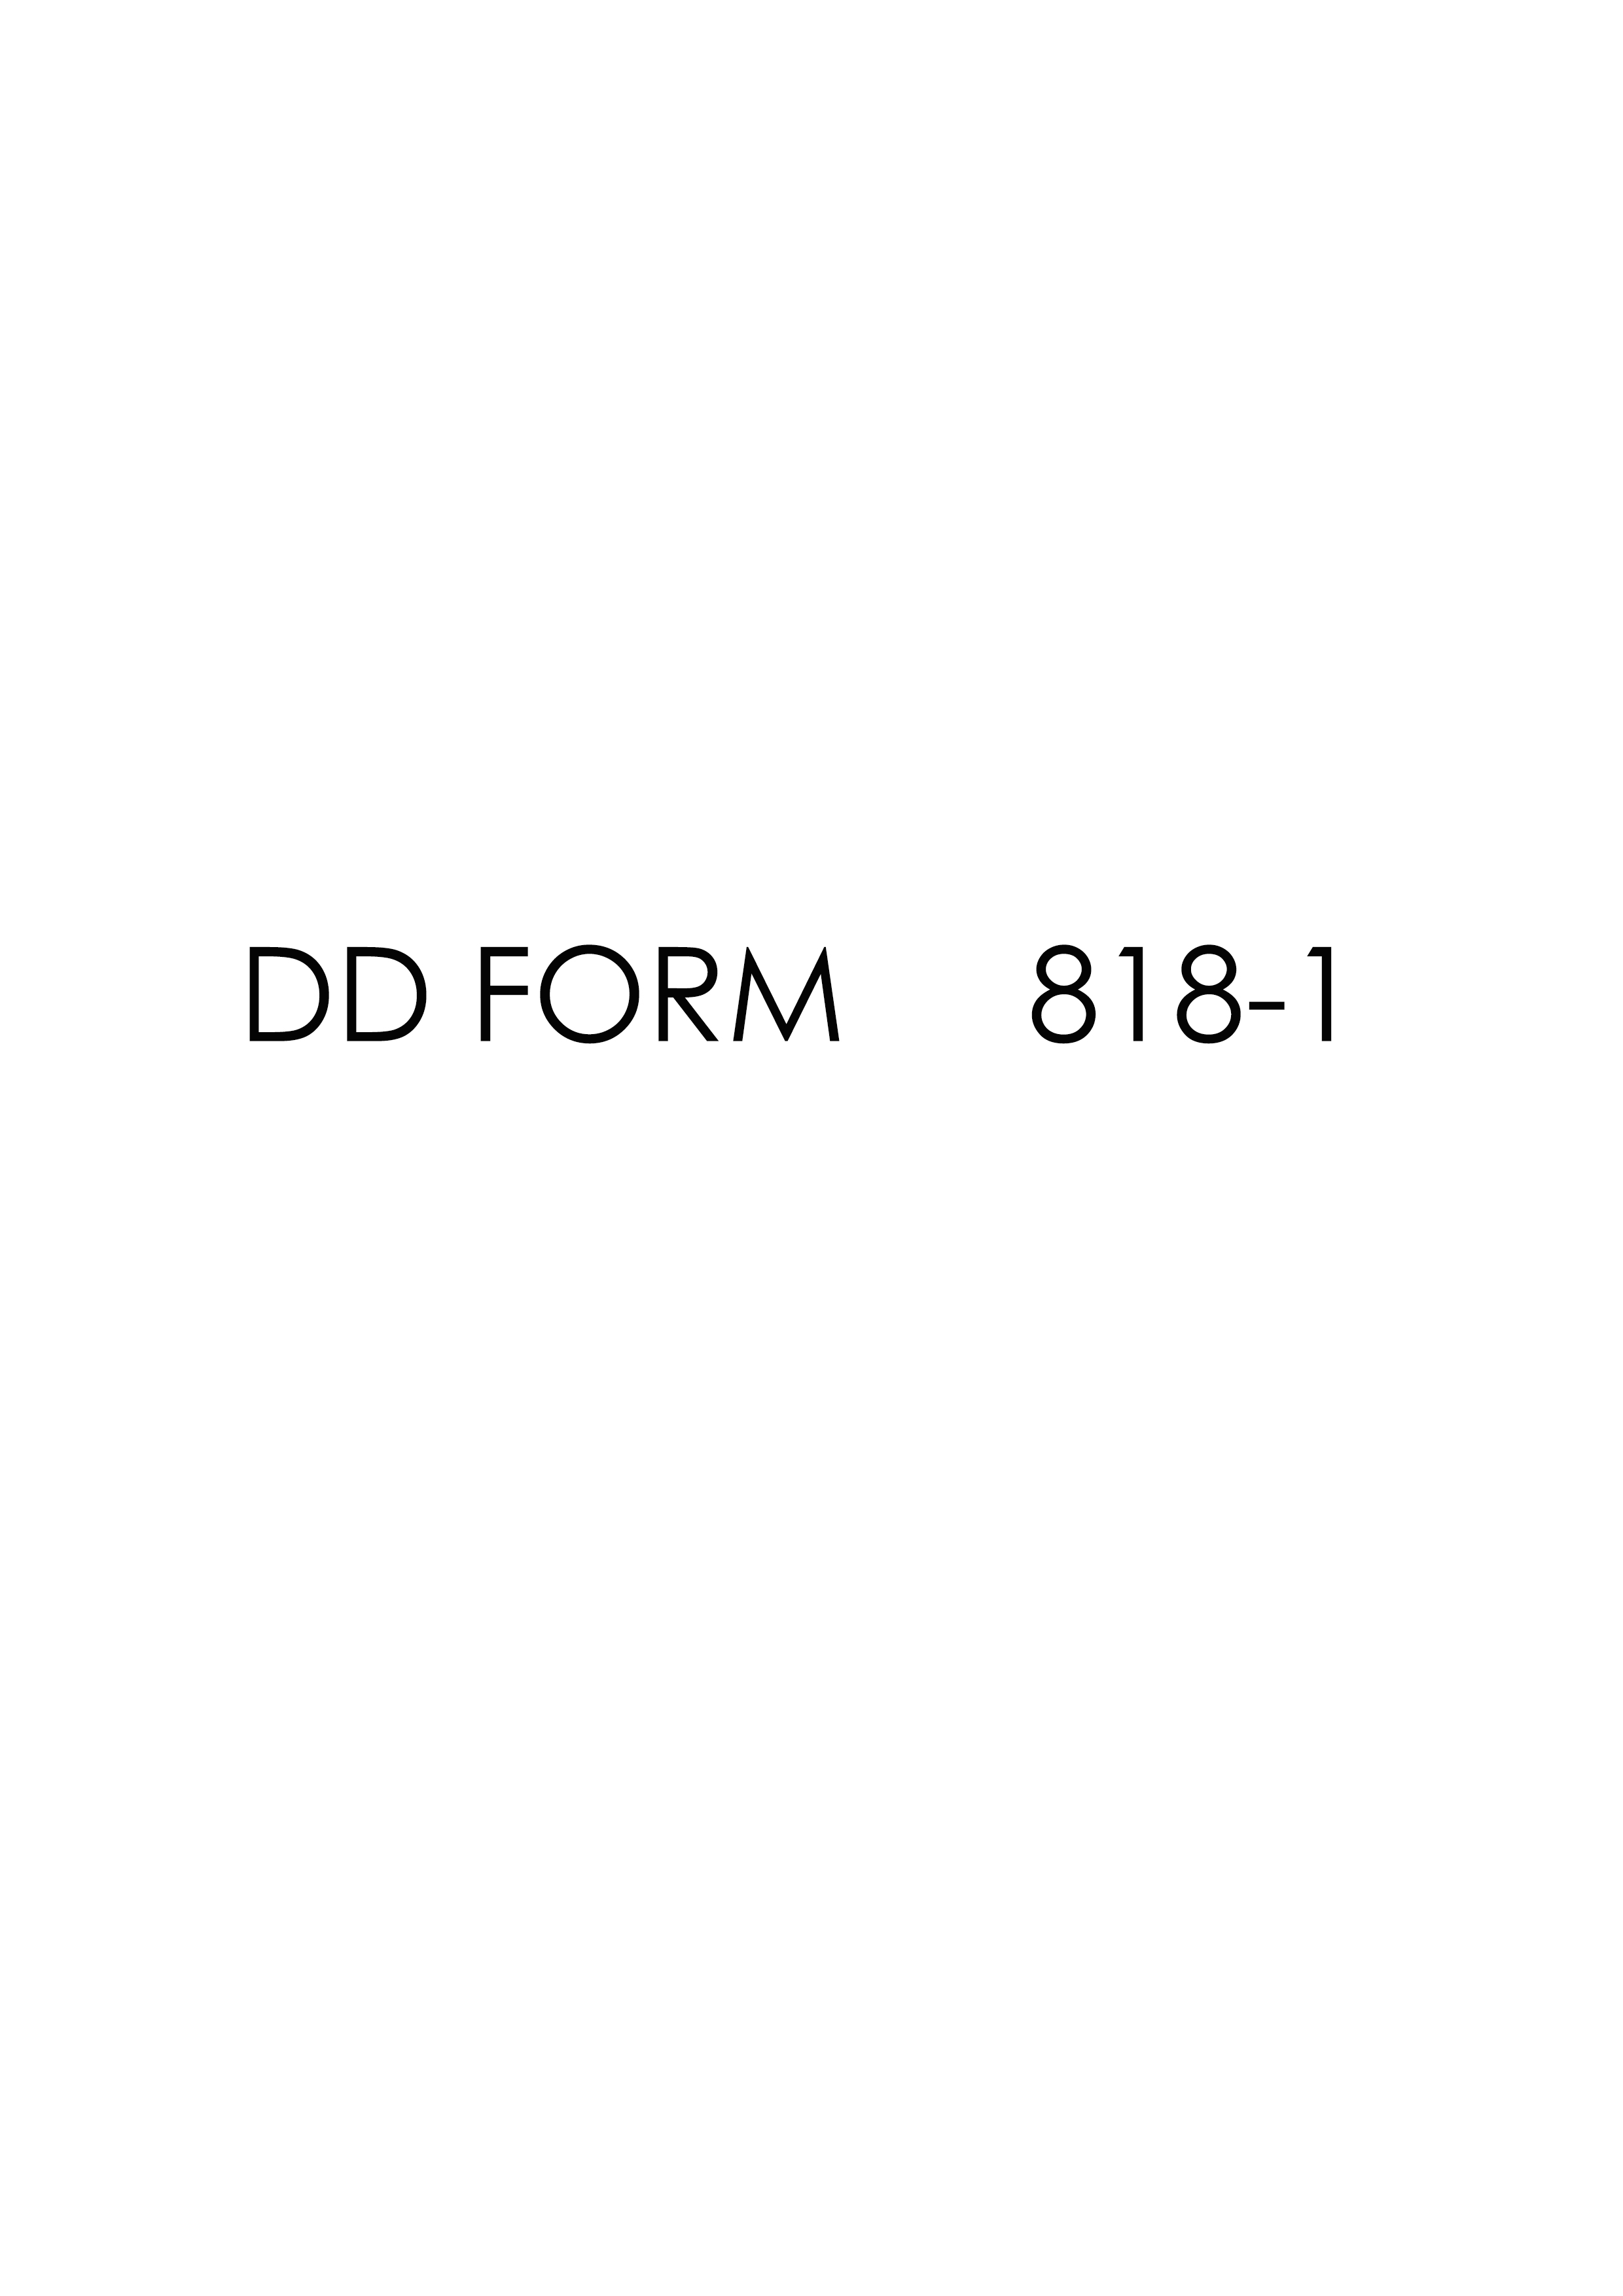 Download dd 818-1 Form Free